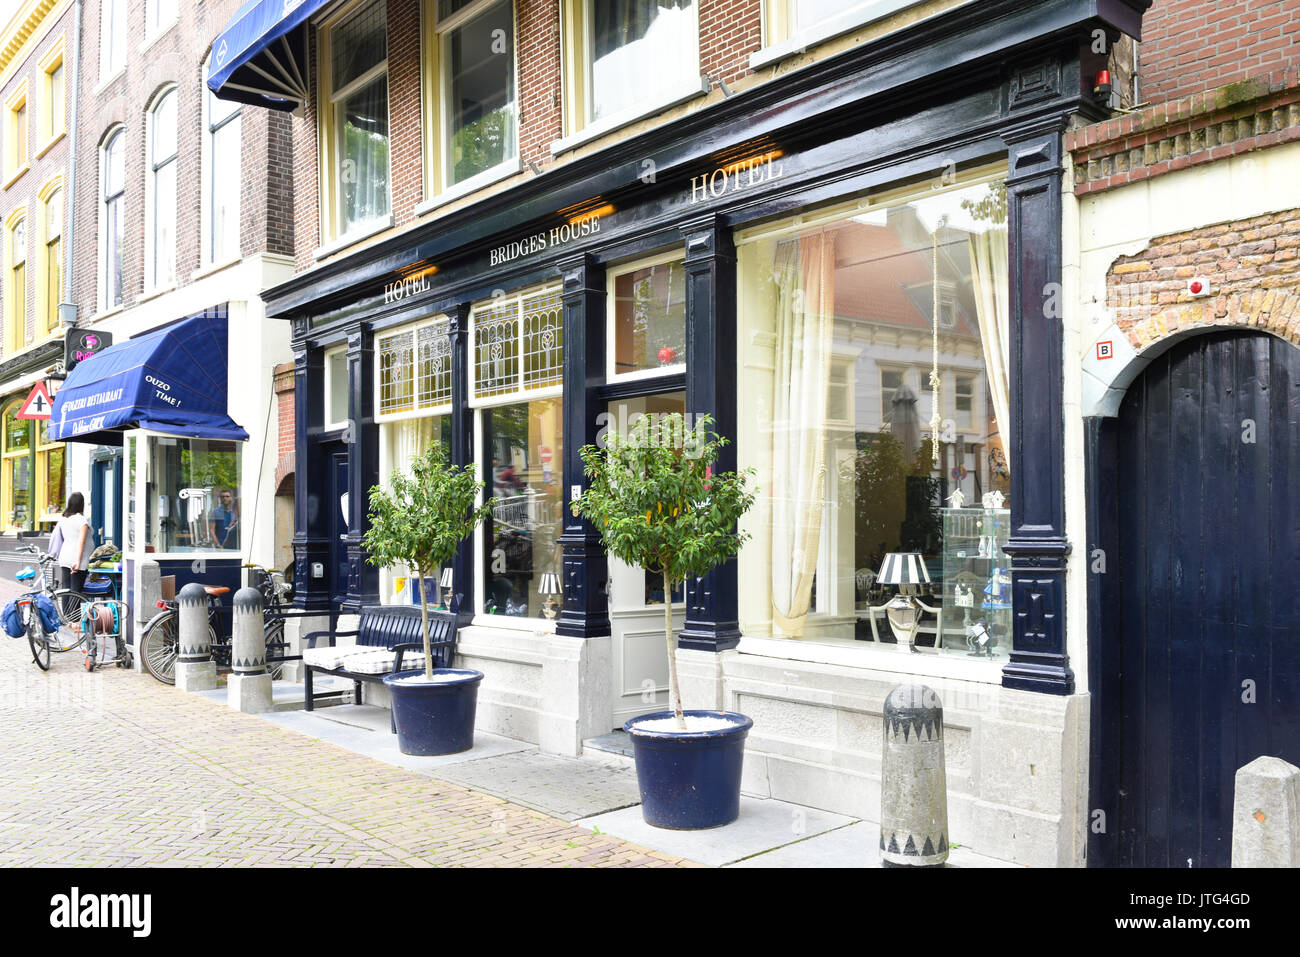 Bellissimo Hotel Bridge House Hotel in Delft, South Holland, Paesi Bassi Foto Stock